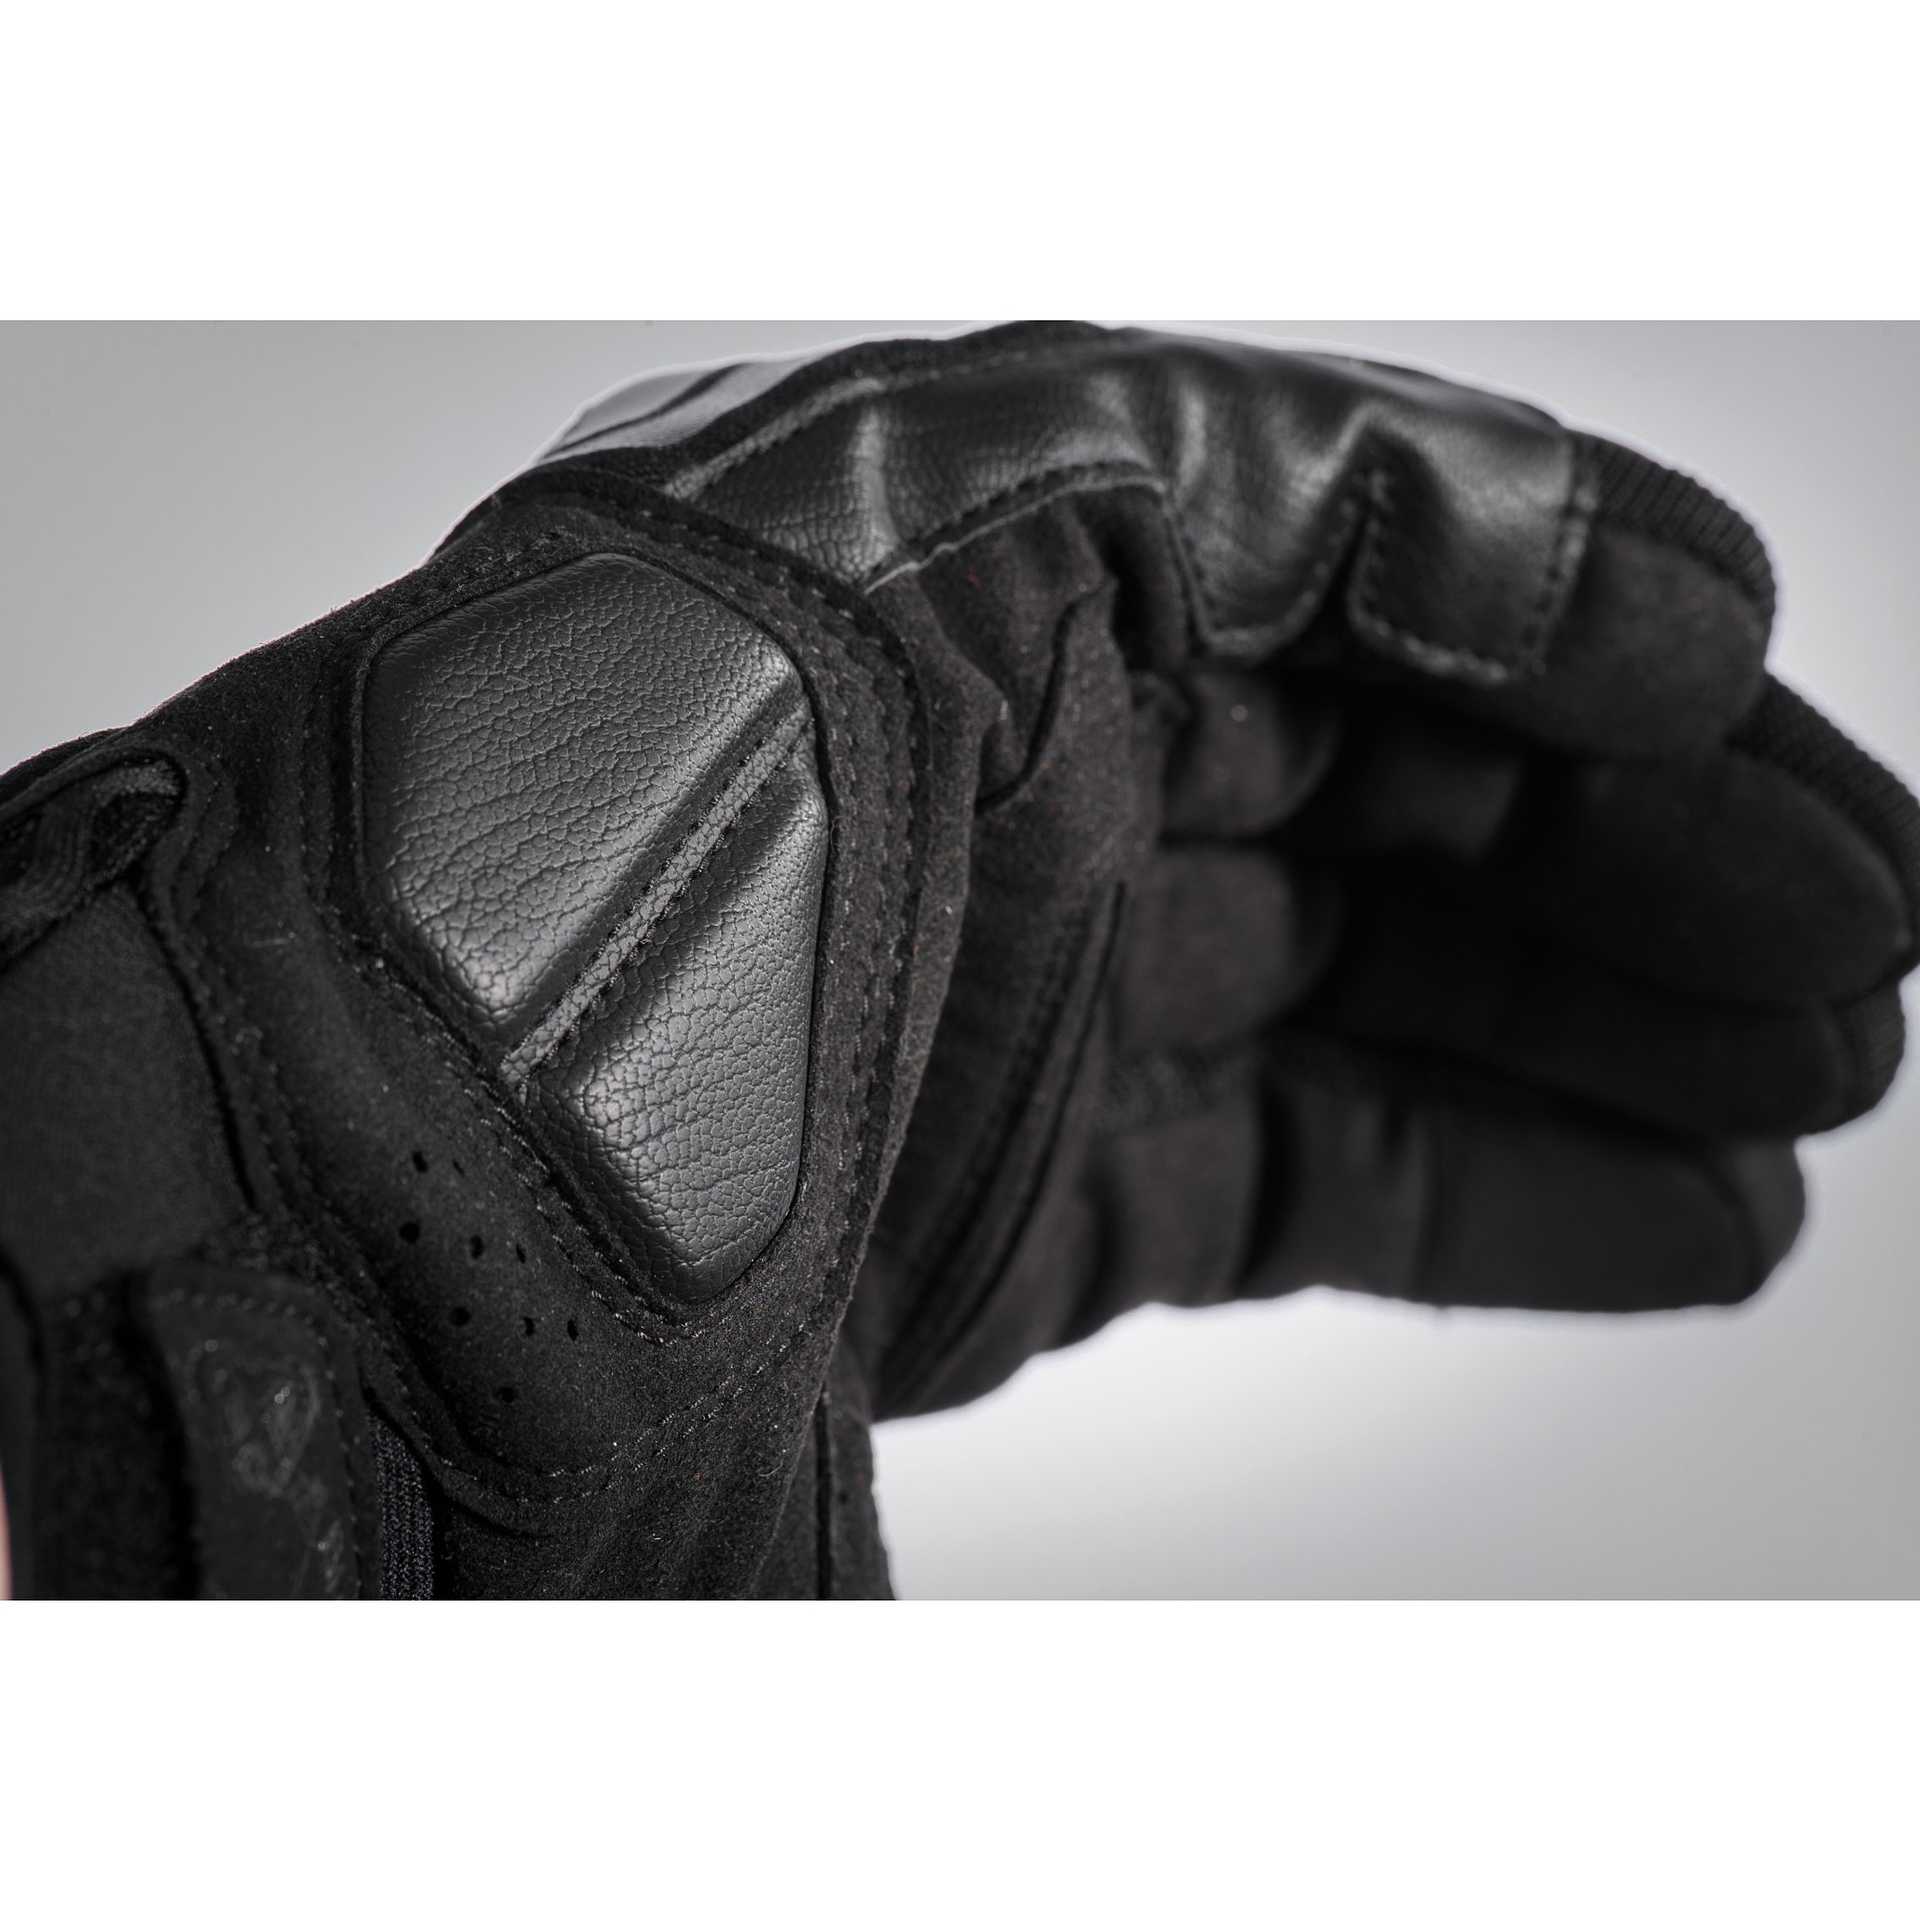 Celer Summer Motorcycle Gloves Alpinestars Leather Glove Black